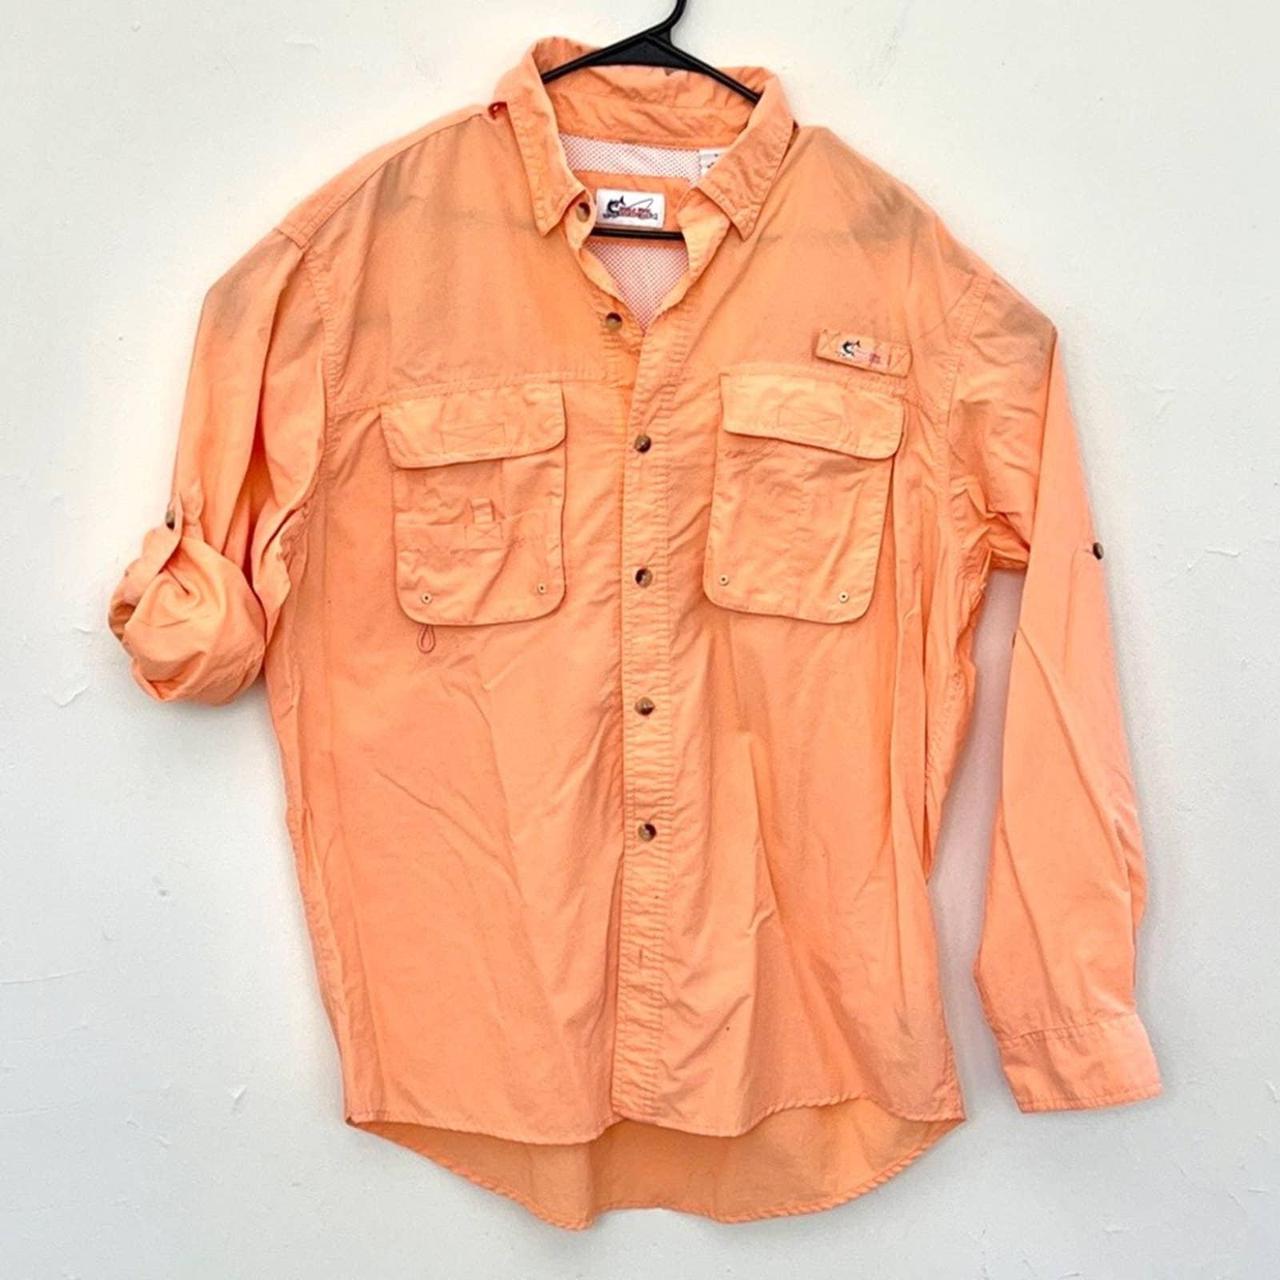 0151/btp WORLD WIDE SPORTSMAN orange fishing shirt - Depop